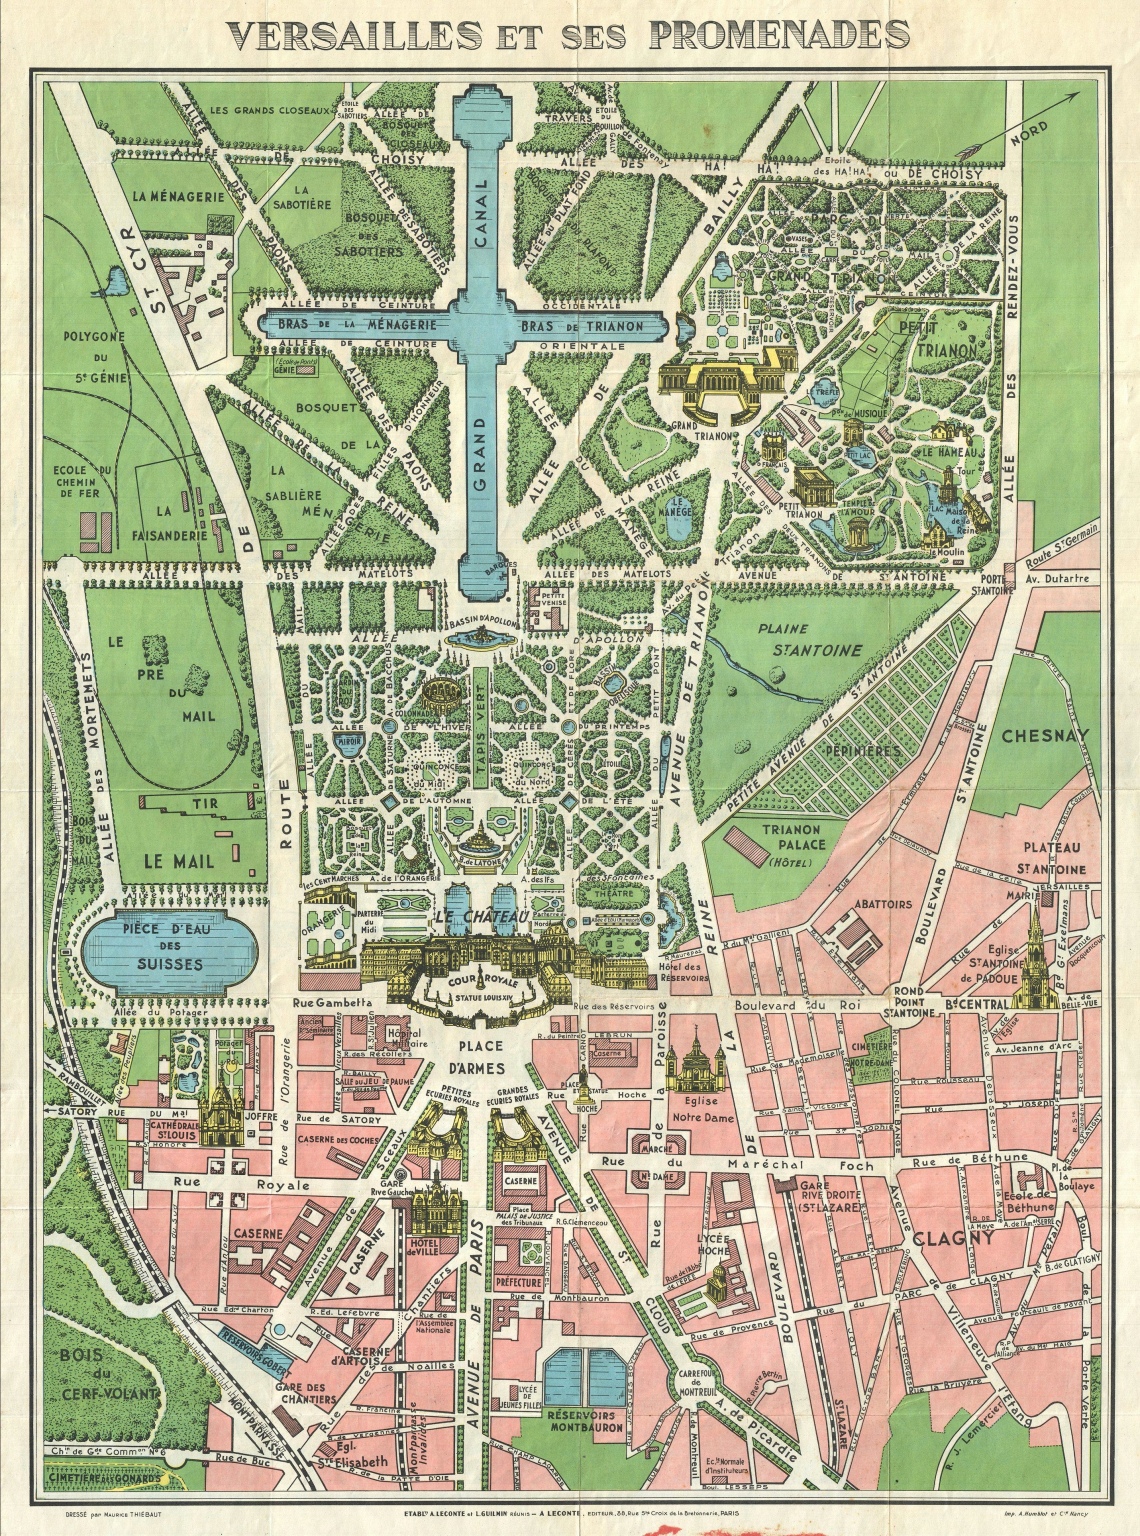 1920s_Leconte_Map_of_Paris_w-Monuments_and_Map_of_Versailles_-_Geographicus_-_ParisVersailles-leconte-1920s_-_2